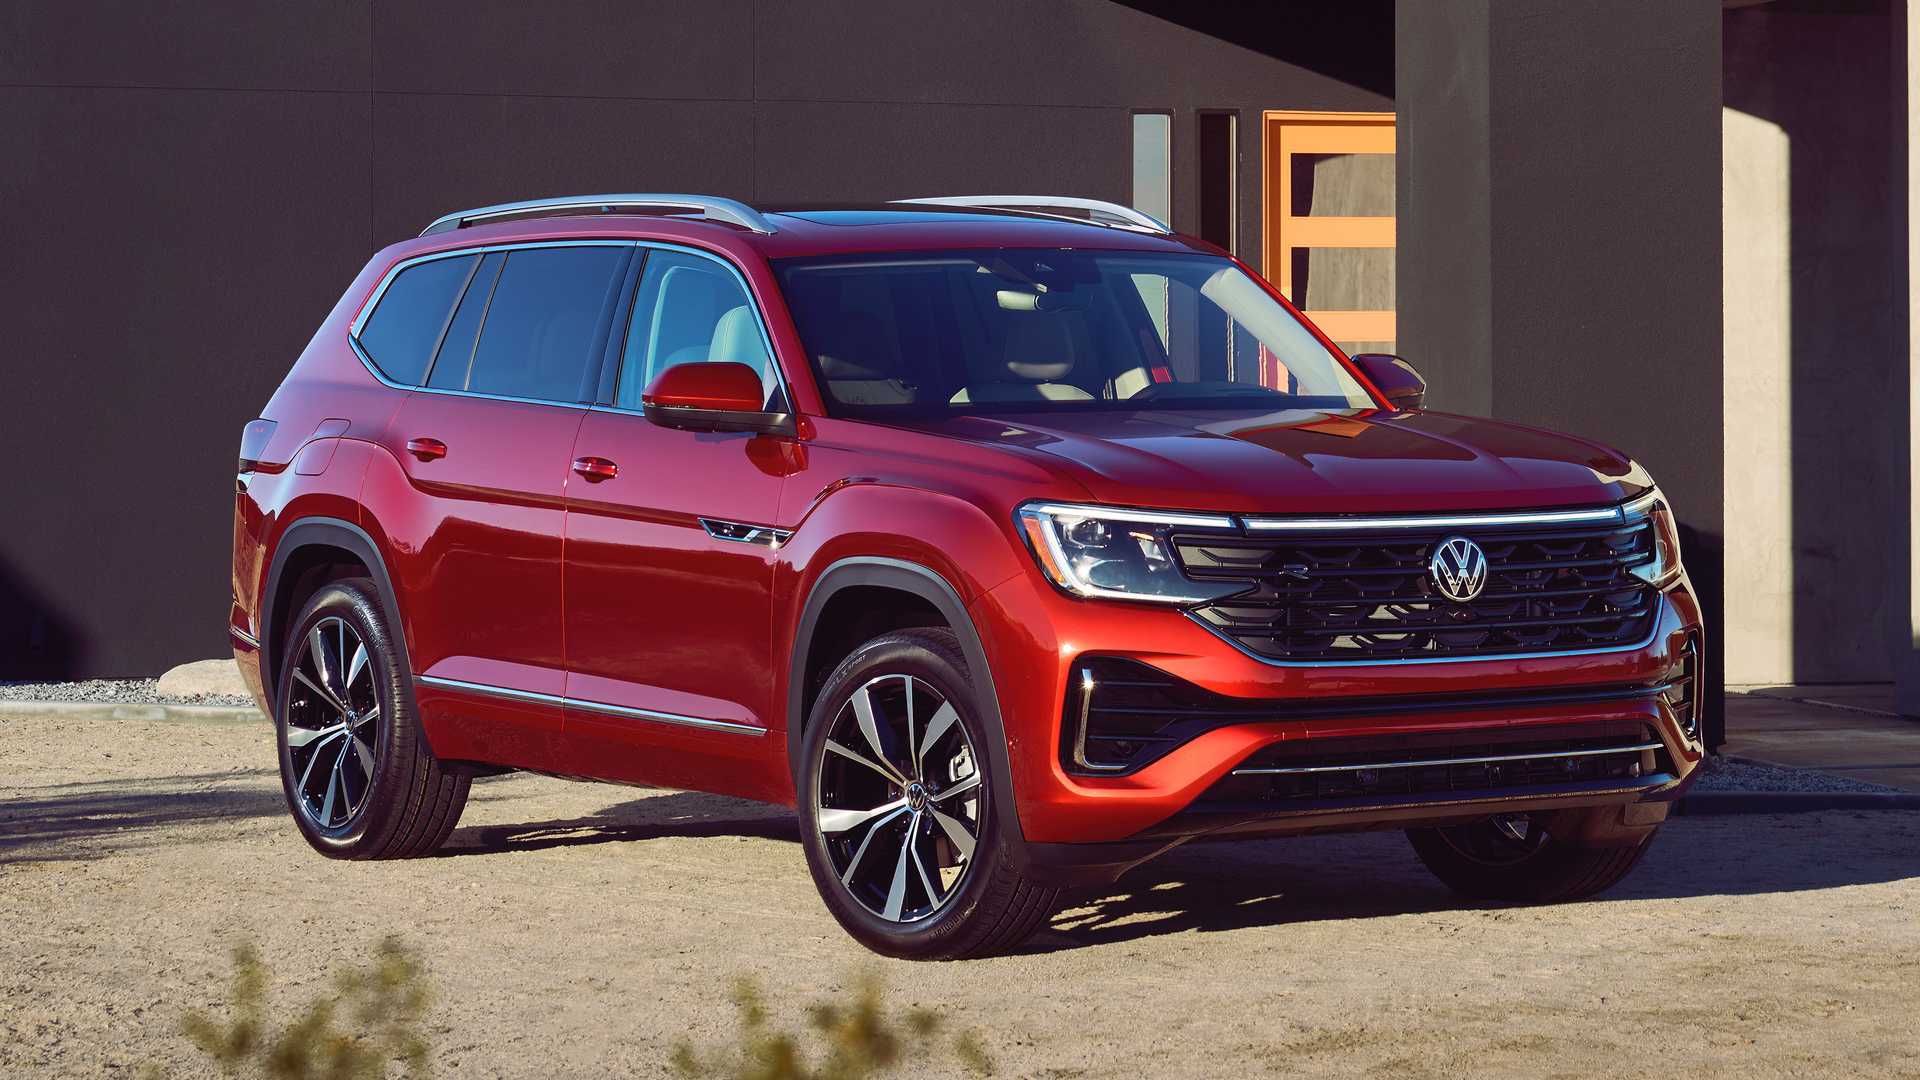 Volkswagen Atlas News and Reviews | Motor1.com